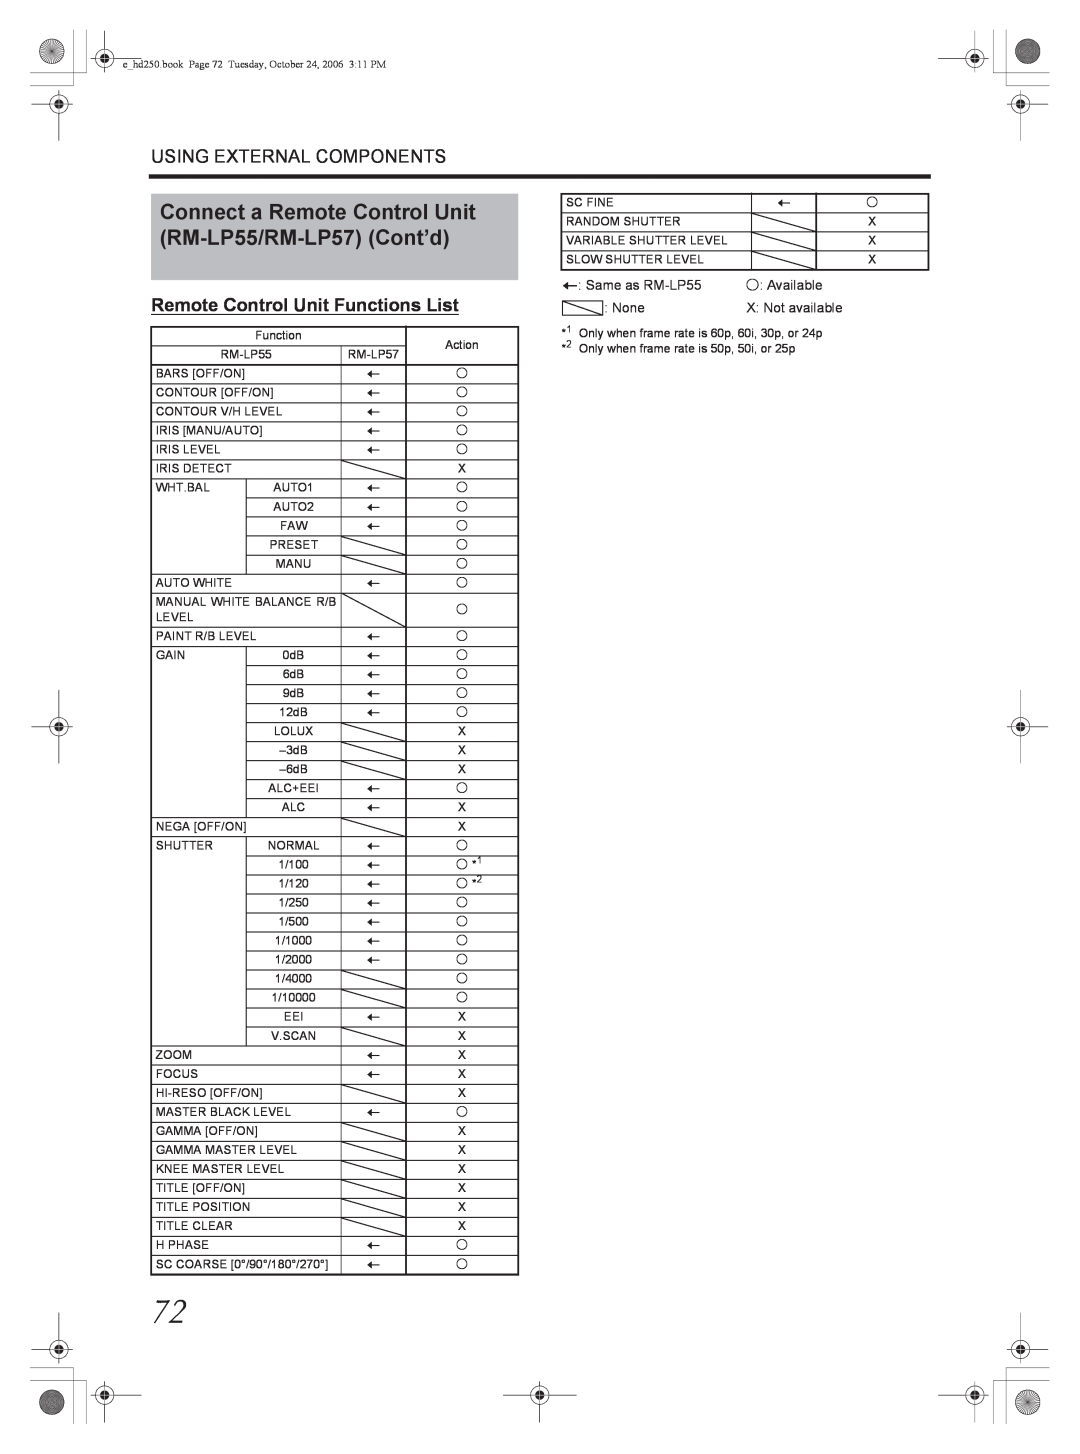 JVC GY-HD250, GY-HD251 manual Connect a Remote Control Unit RM-LP55/RM-LP57 Cont’d, Remote Control Unit Functions List 